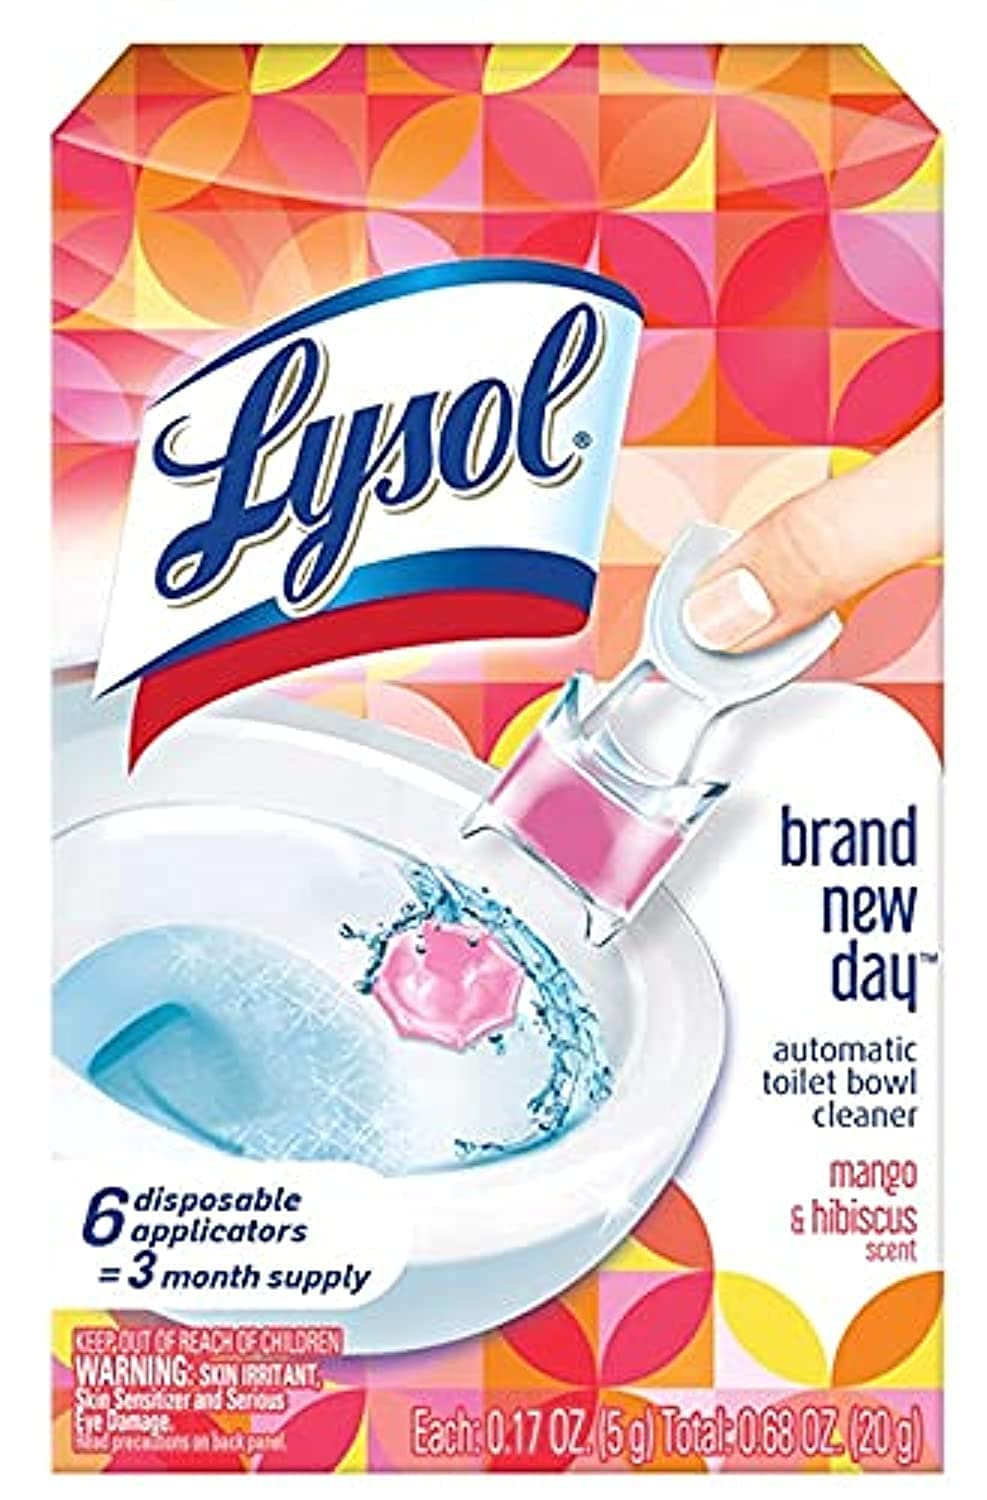 Lysol Click Gel Automatic Toilet Bowl Cleaner, Gel Toilet Bowl Cleaner, For Cleaning and Refreshing, Mango & Hibiscus, 6 applicators.